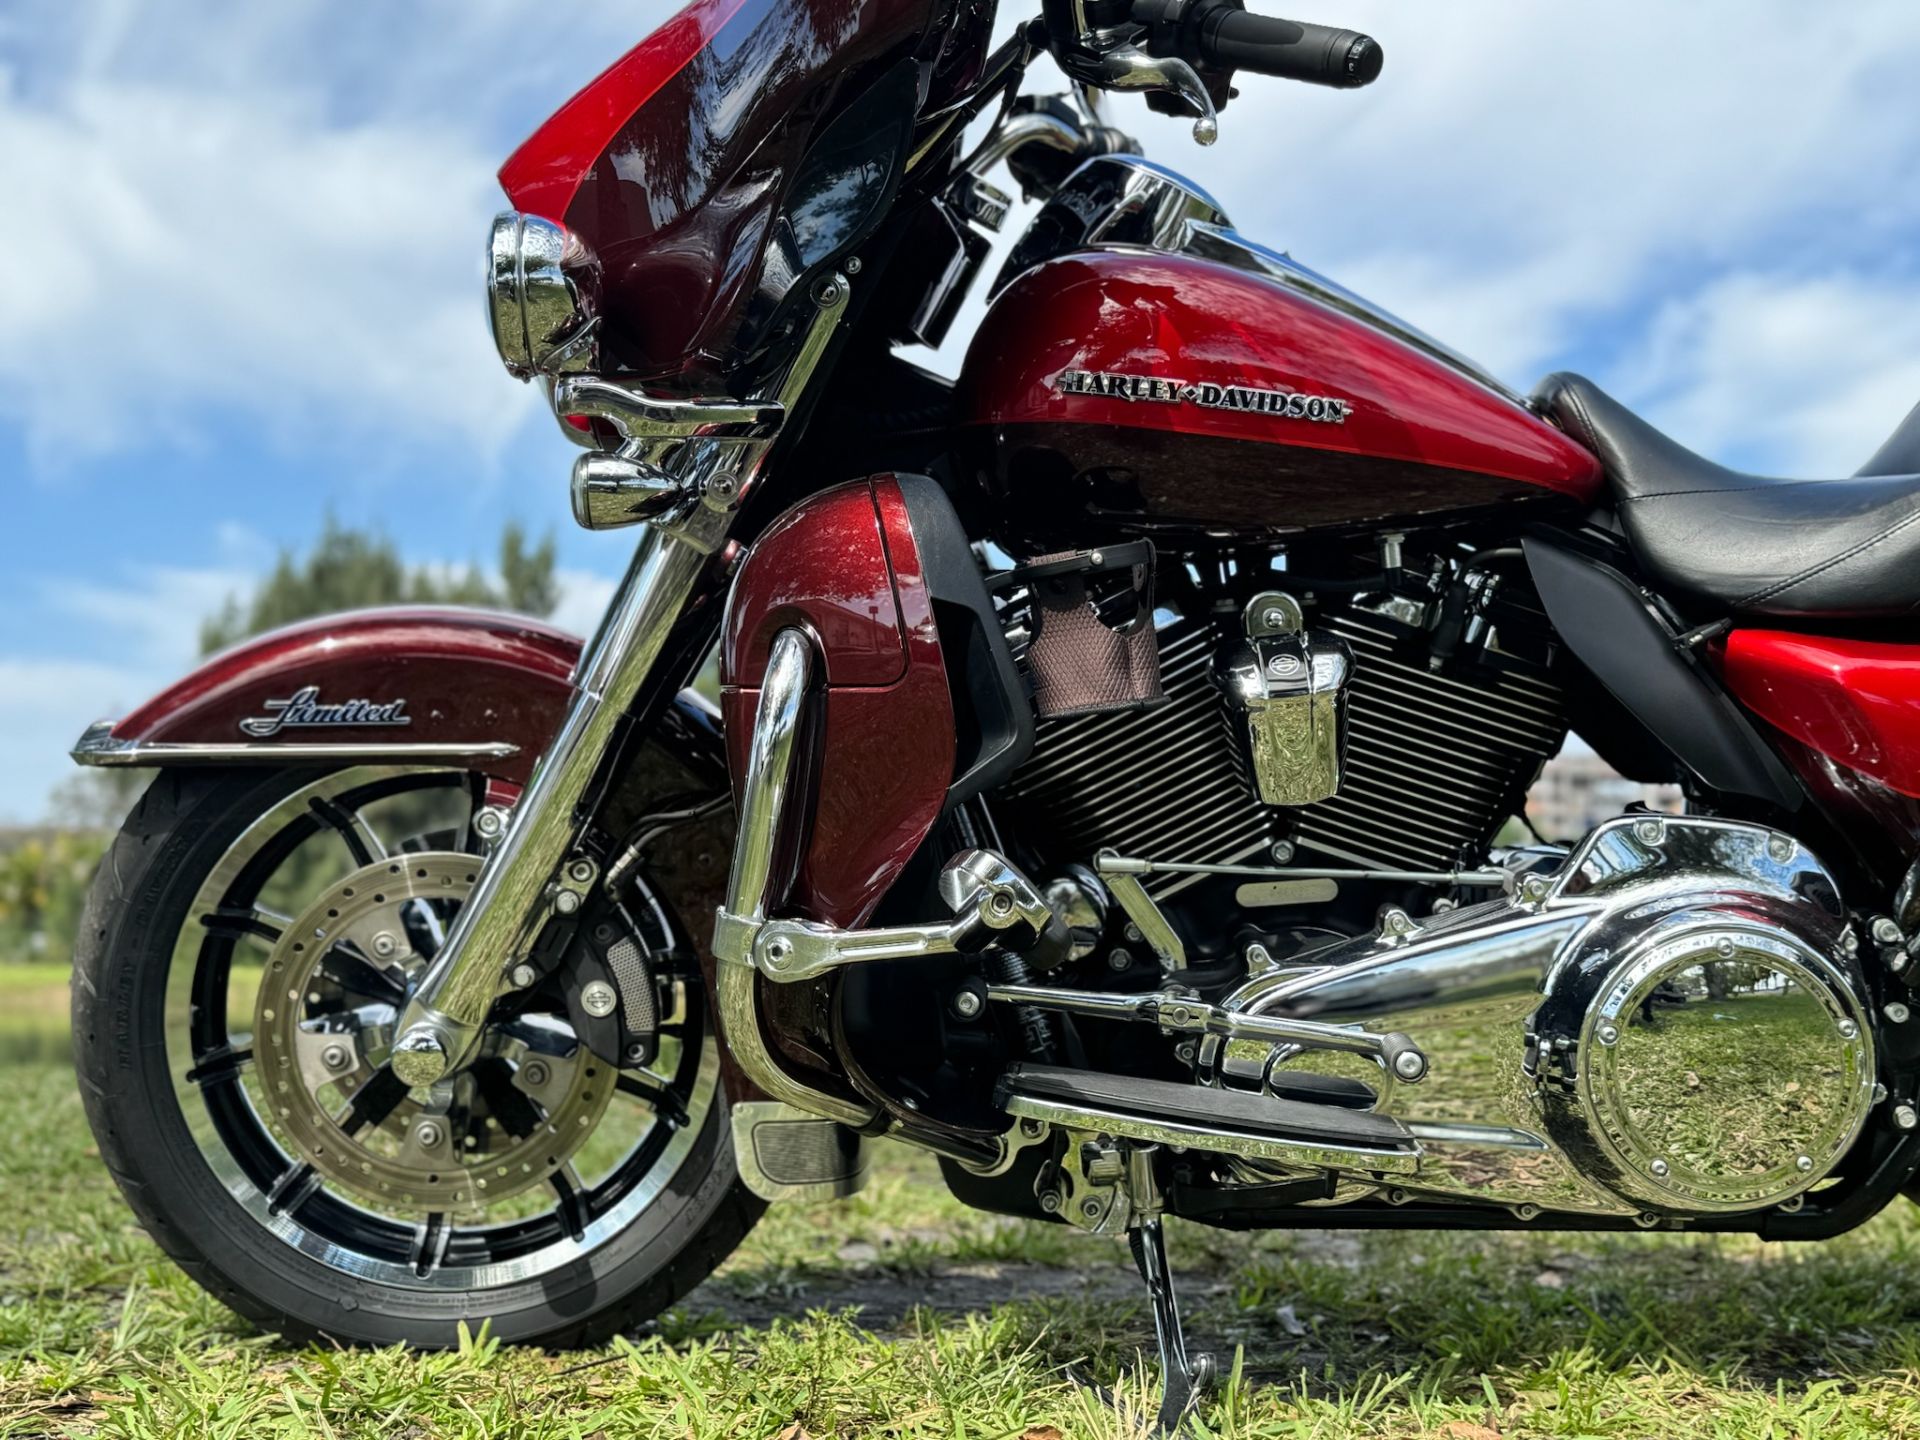 2019 Harley-Davidson Electra Glide® Ultra Classic® in North Miami Beach, Florida - Photo 15